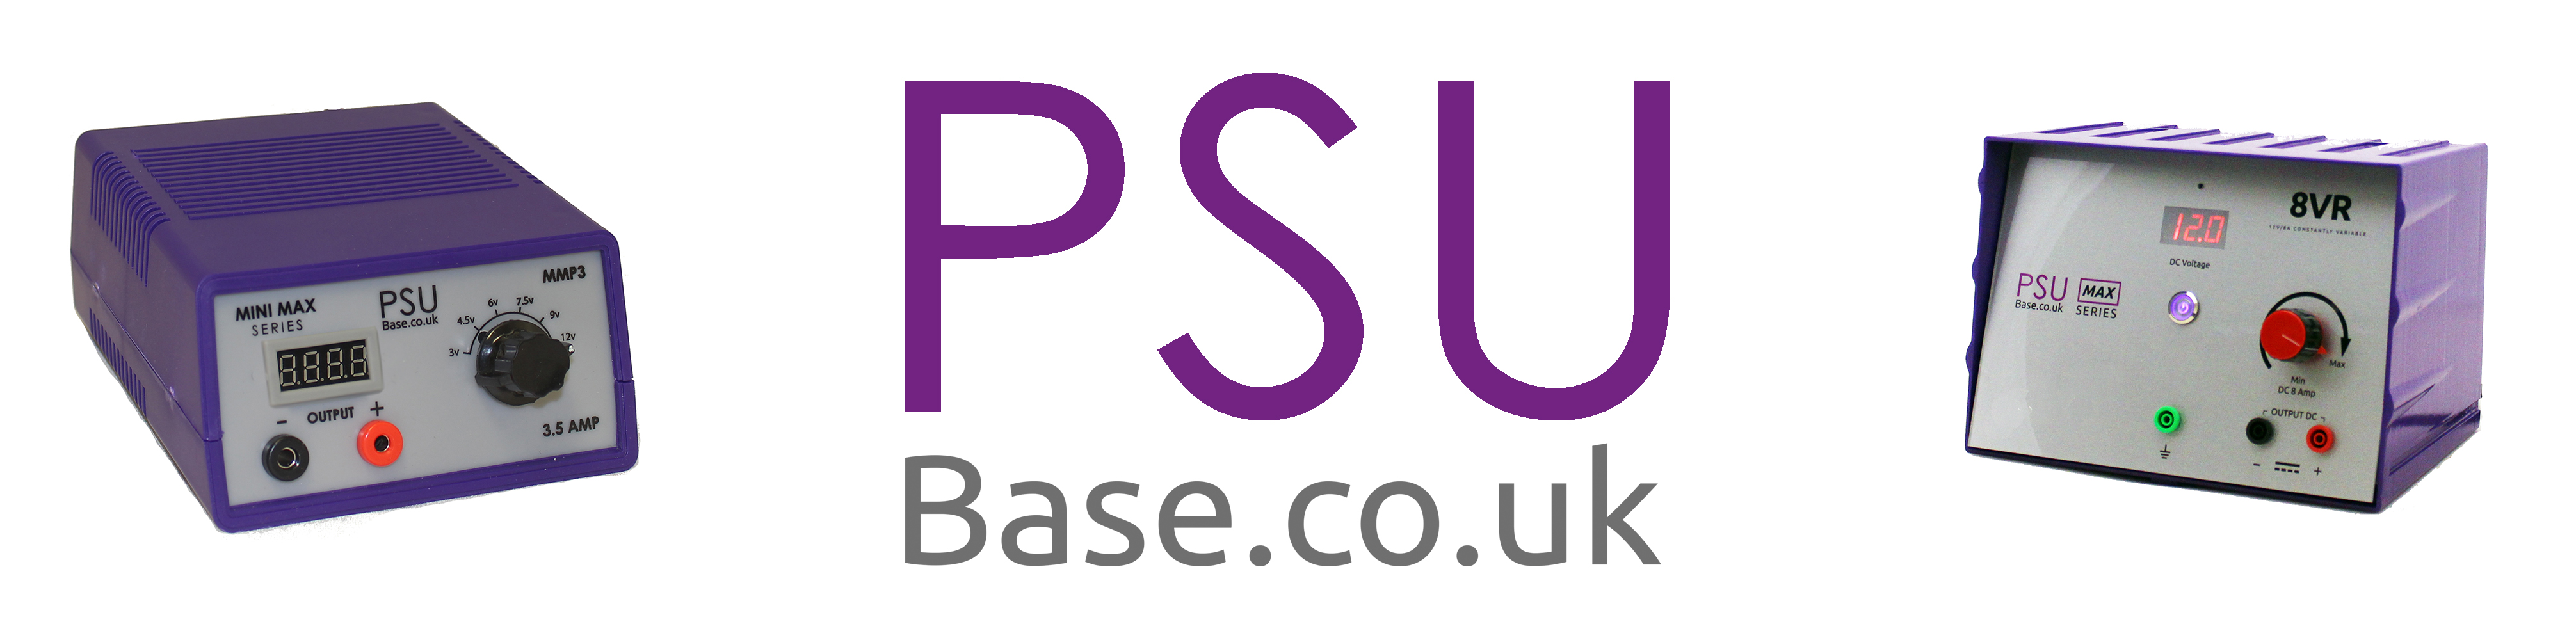 PSU Base Power Supplies - Show all